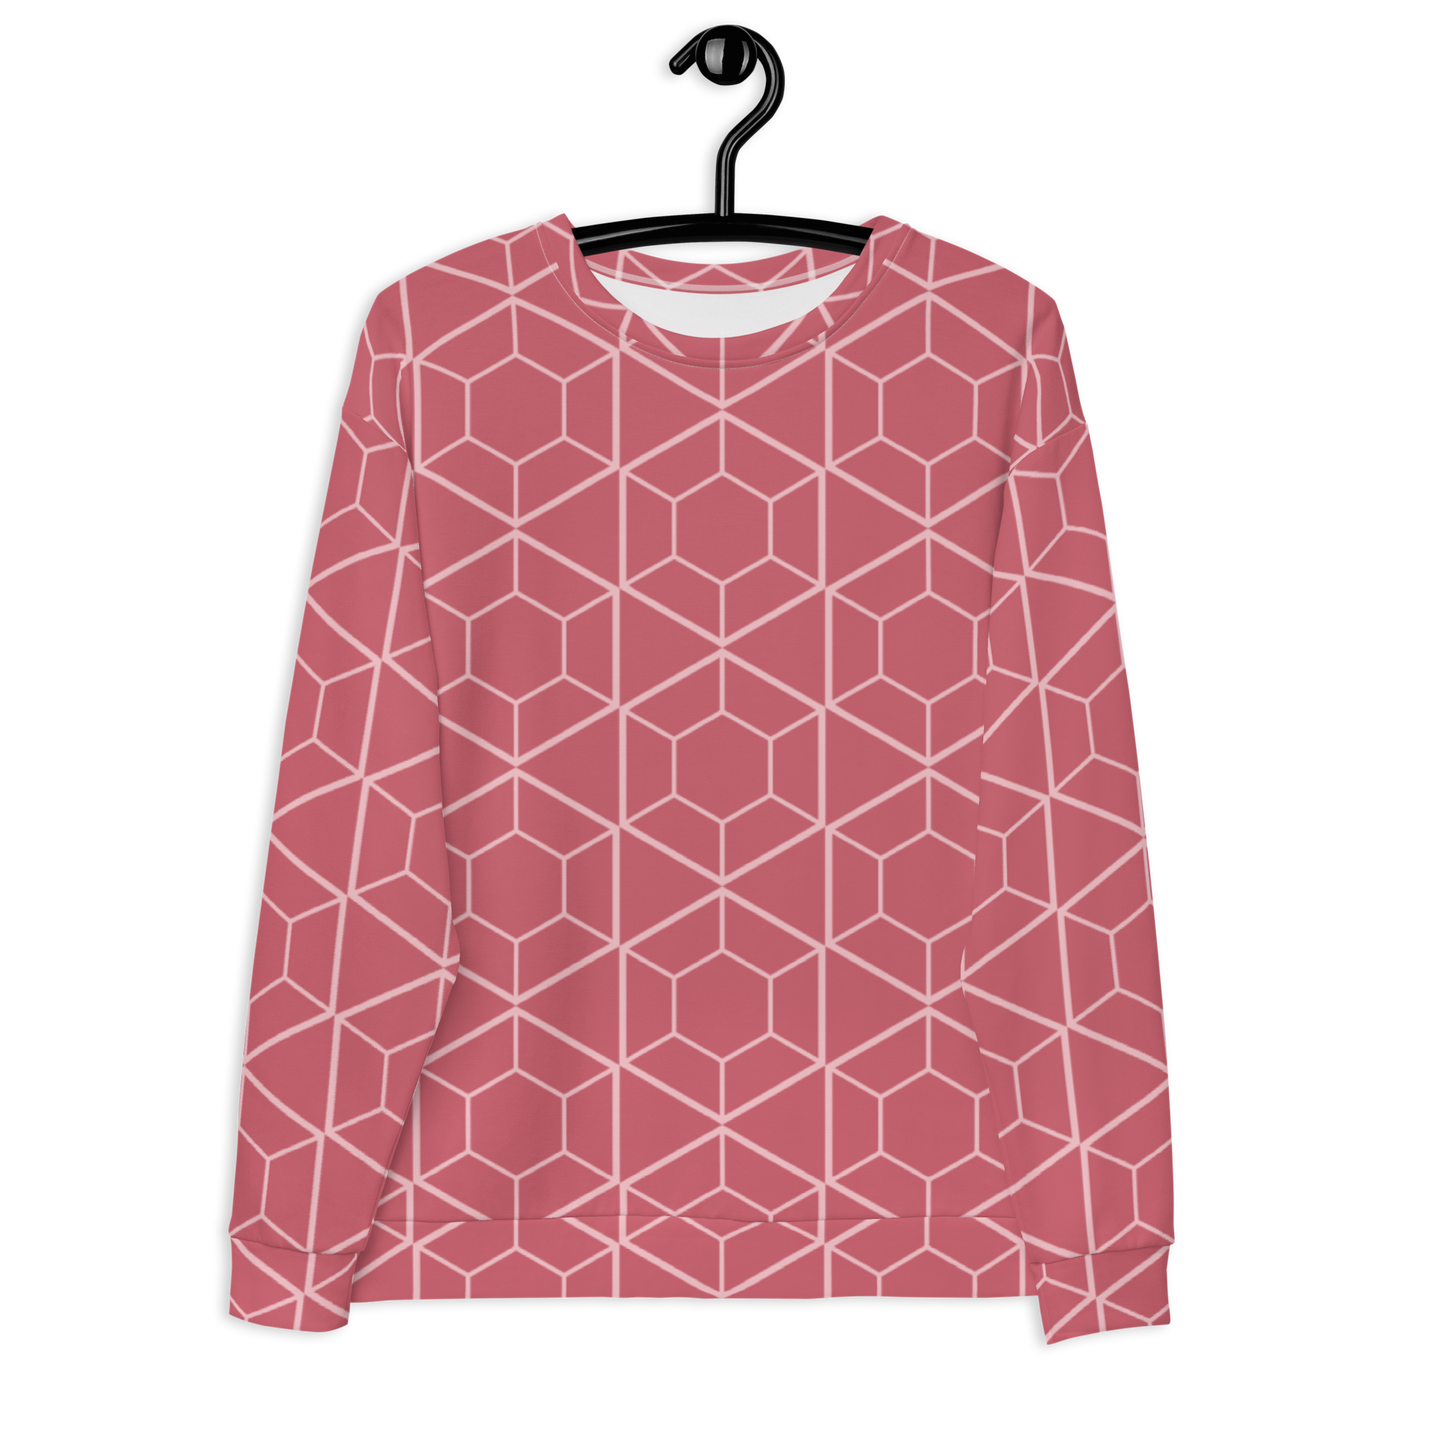 Hexagon Pattern Sweatshirt